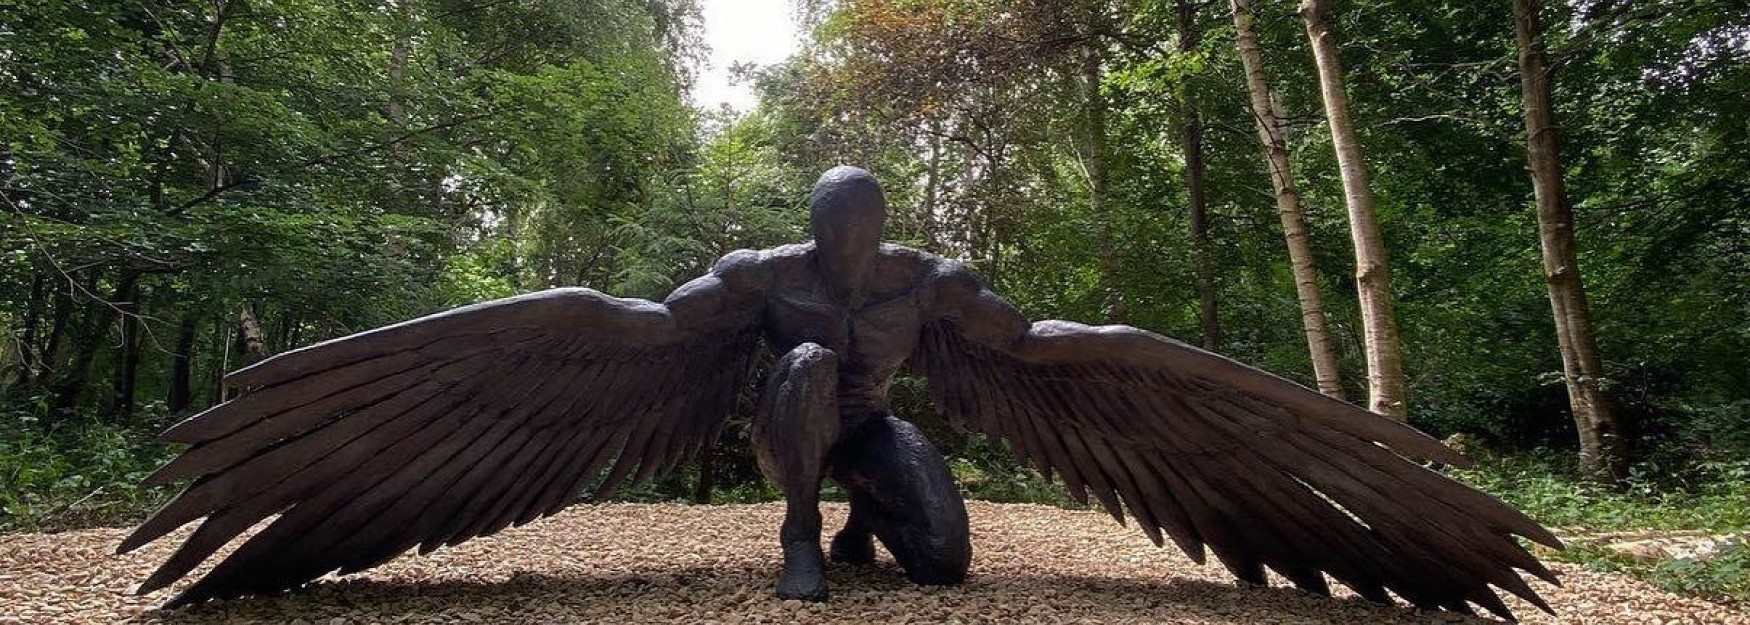 Crouching angel sculpture at Cotswold Sculpture Park